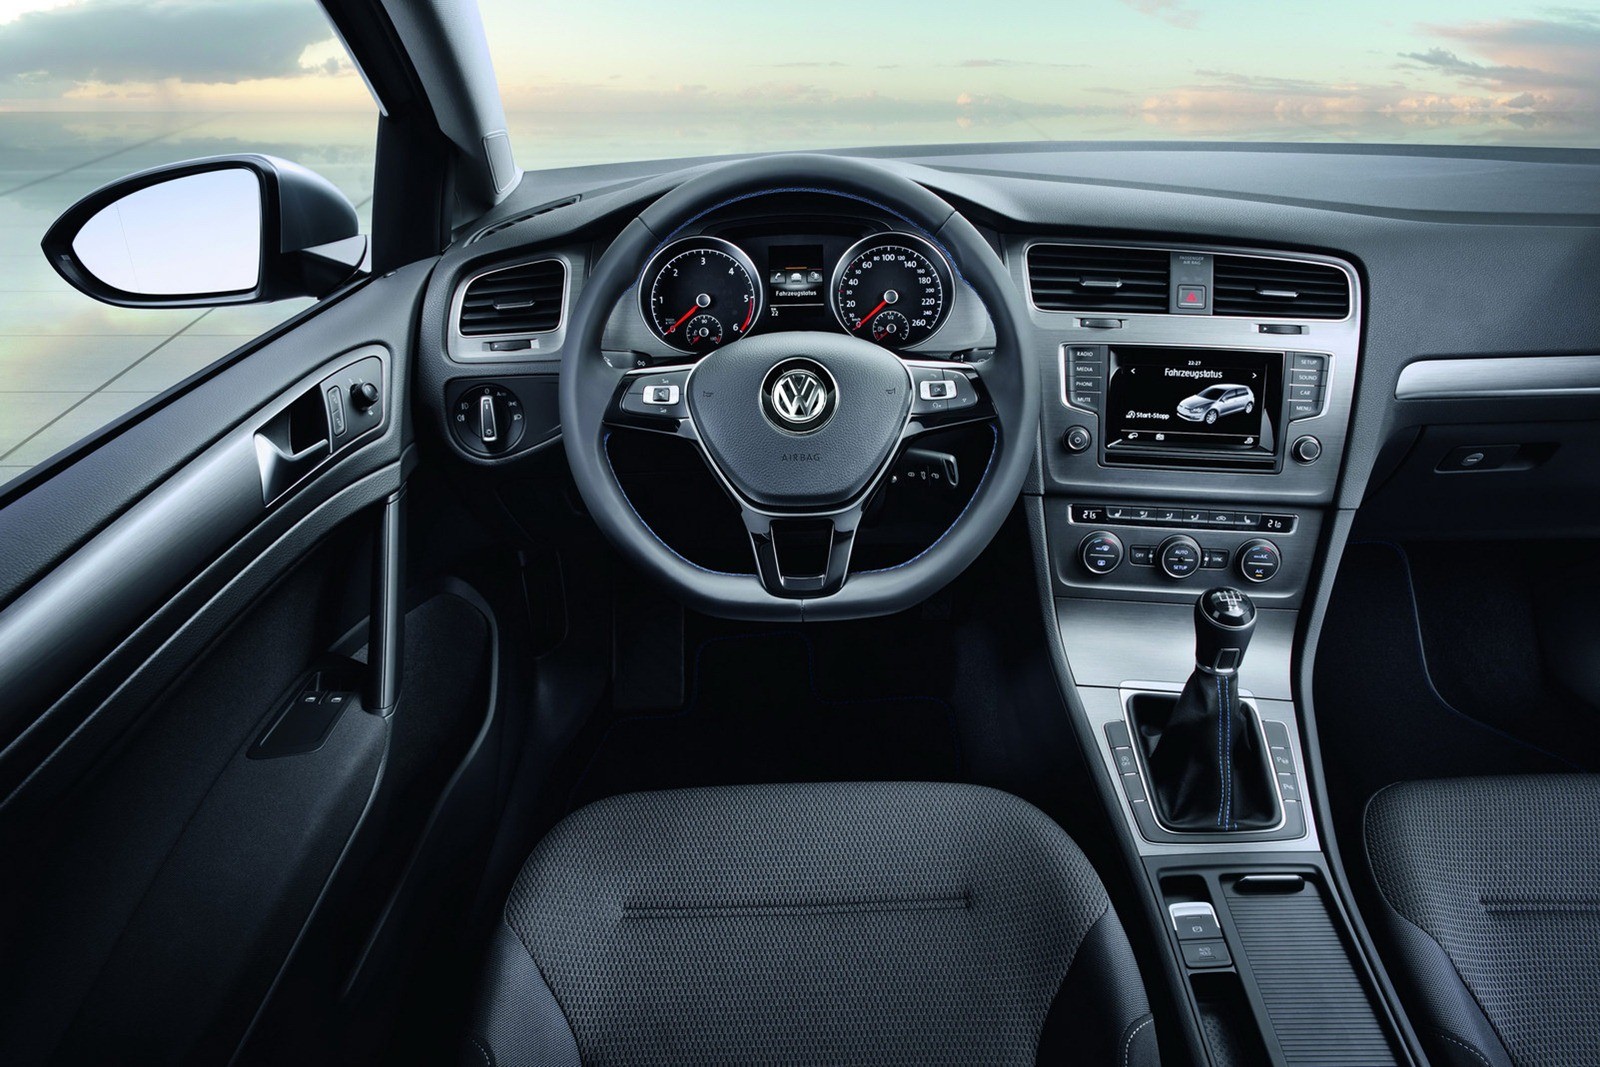  Volkswagen Golf 7 BlueMotion 3.2 litre/100km. (CO2 emisyonu 85g/km)